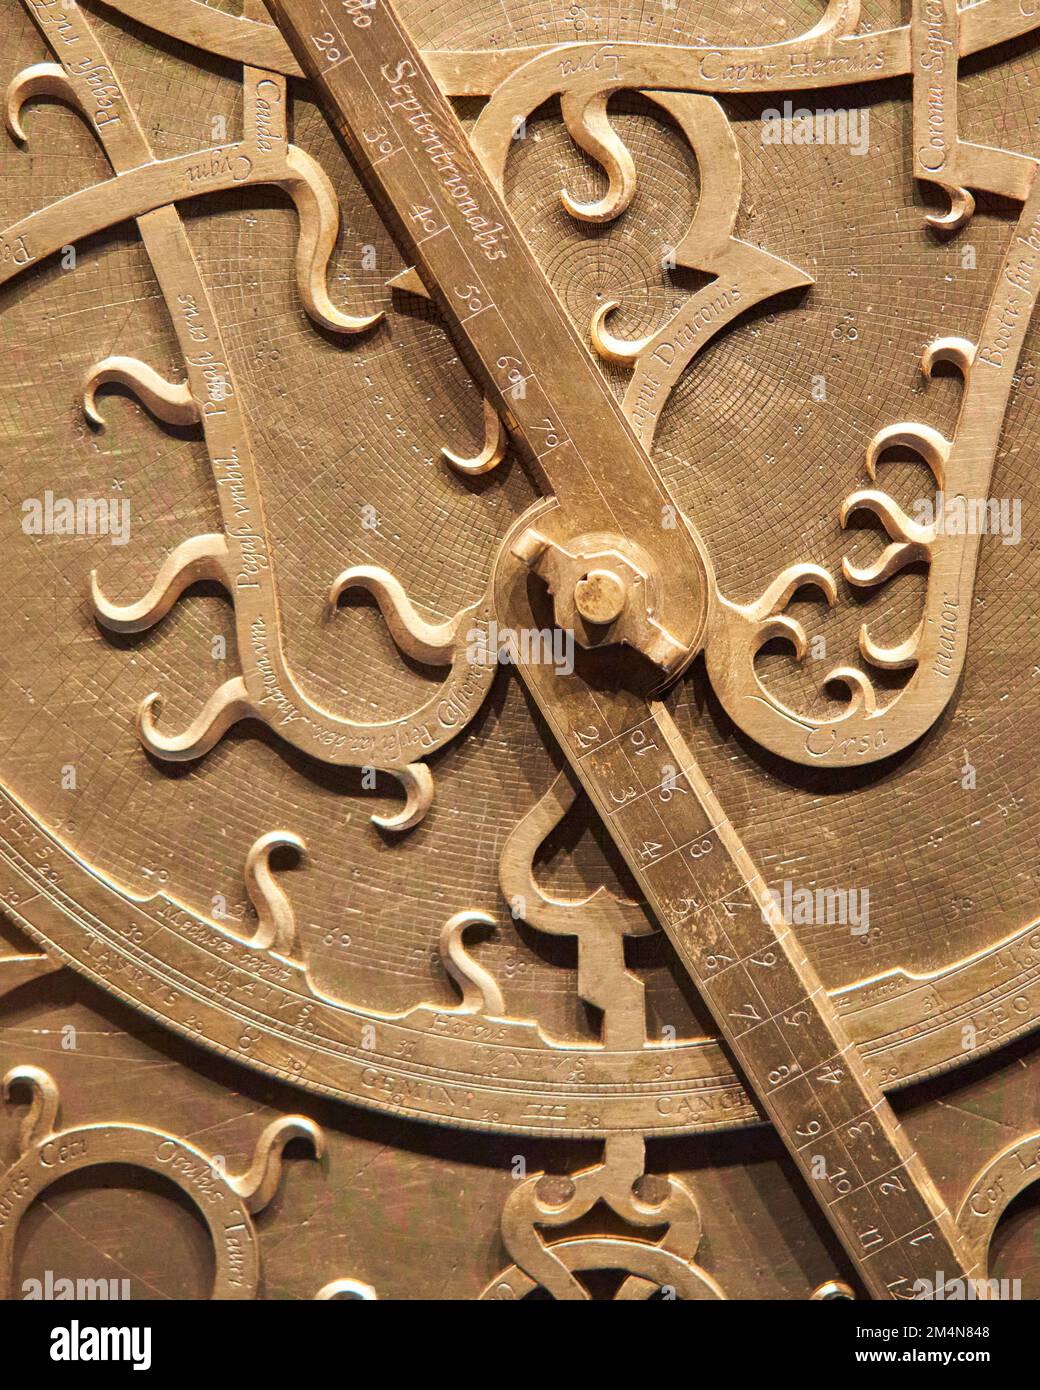 17th Centuary Astrolabe, detail. Stock Photo